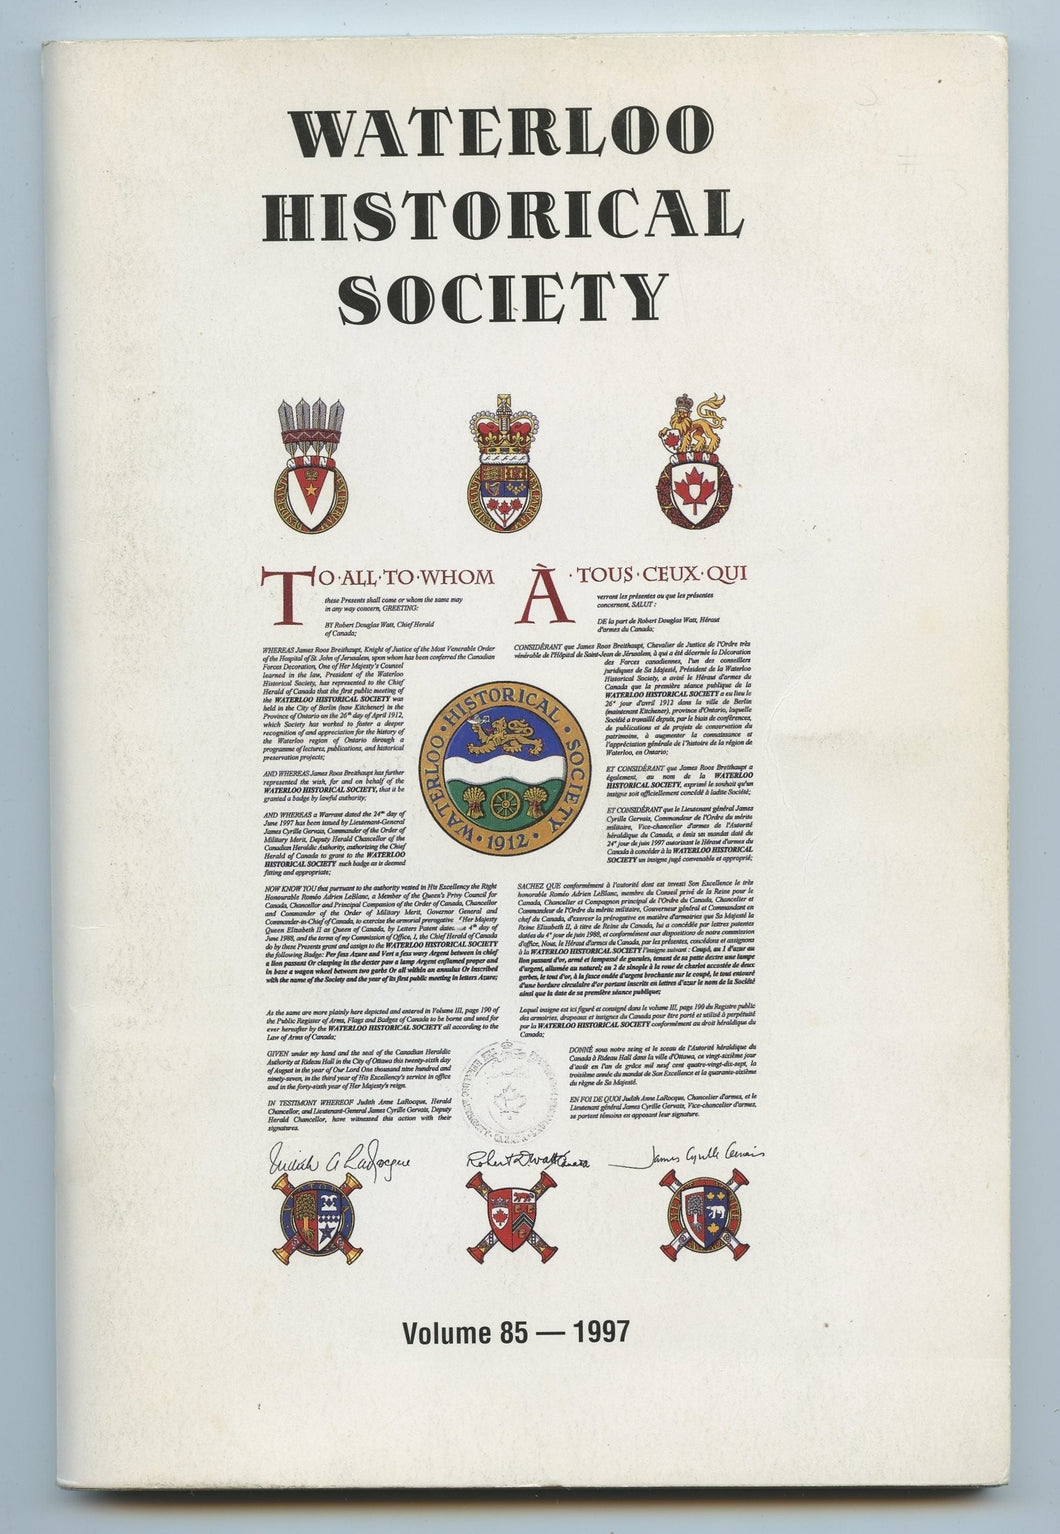 Waterloo Historical Society Vol. 85 - 1997